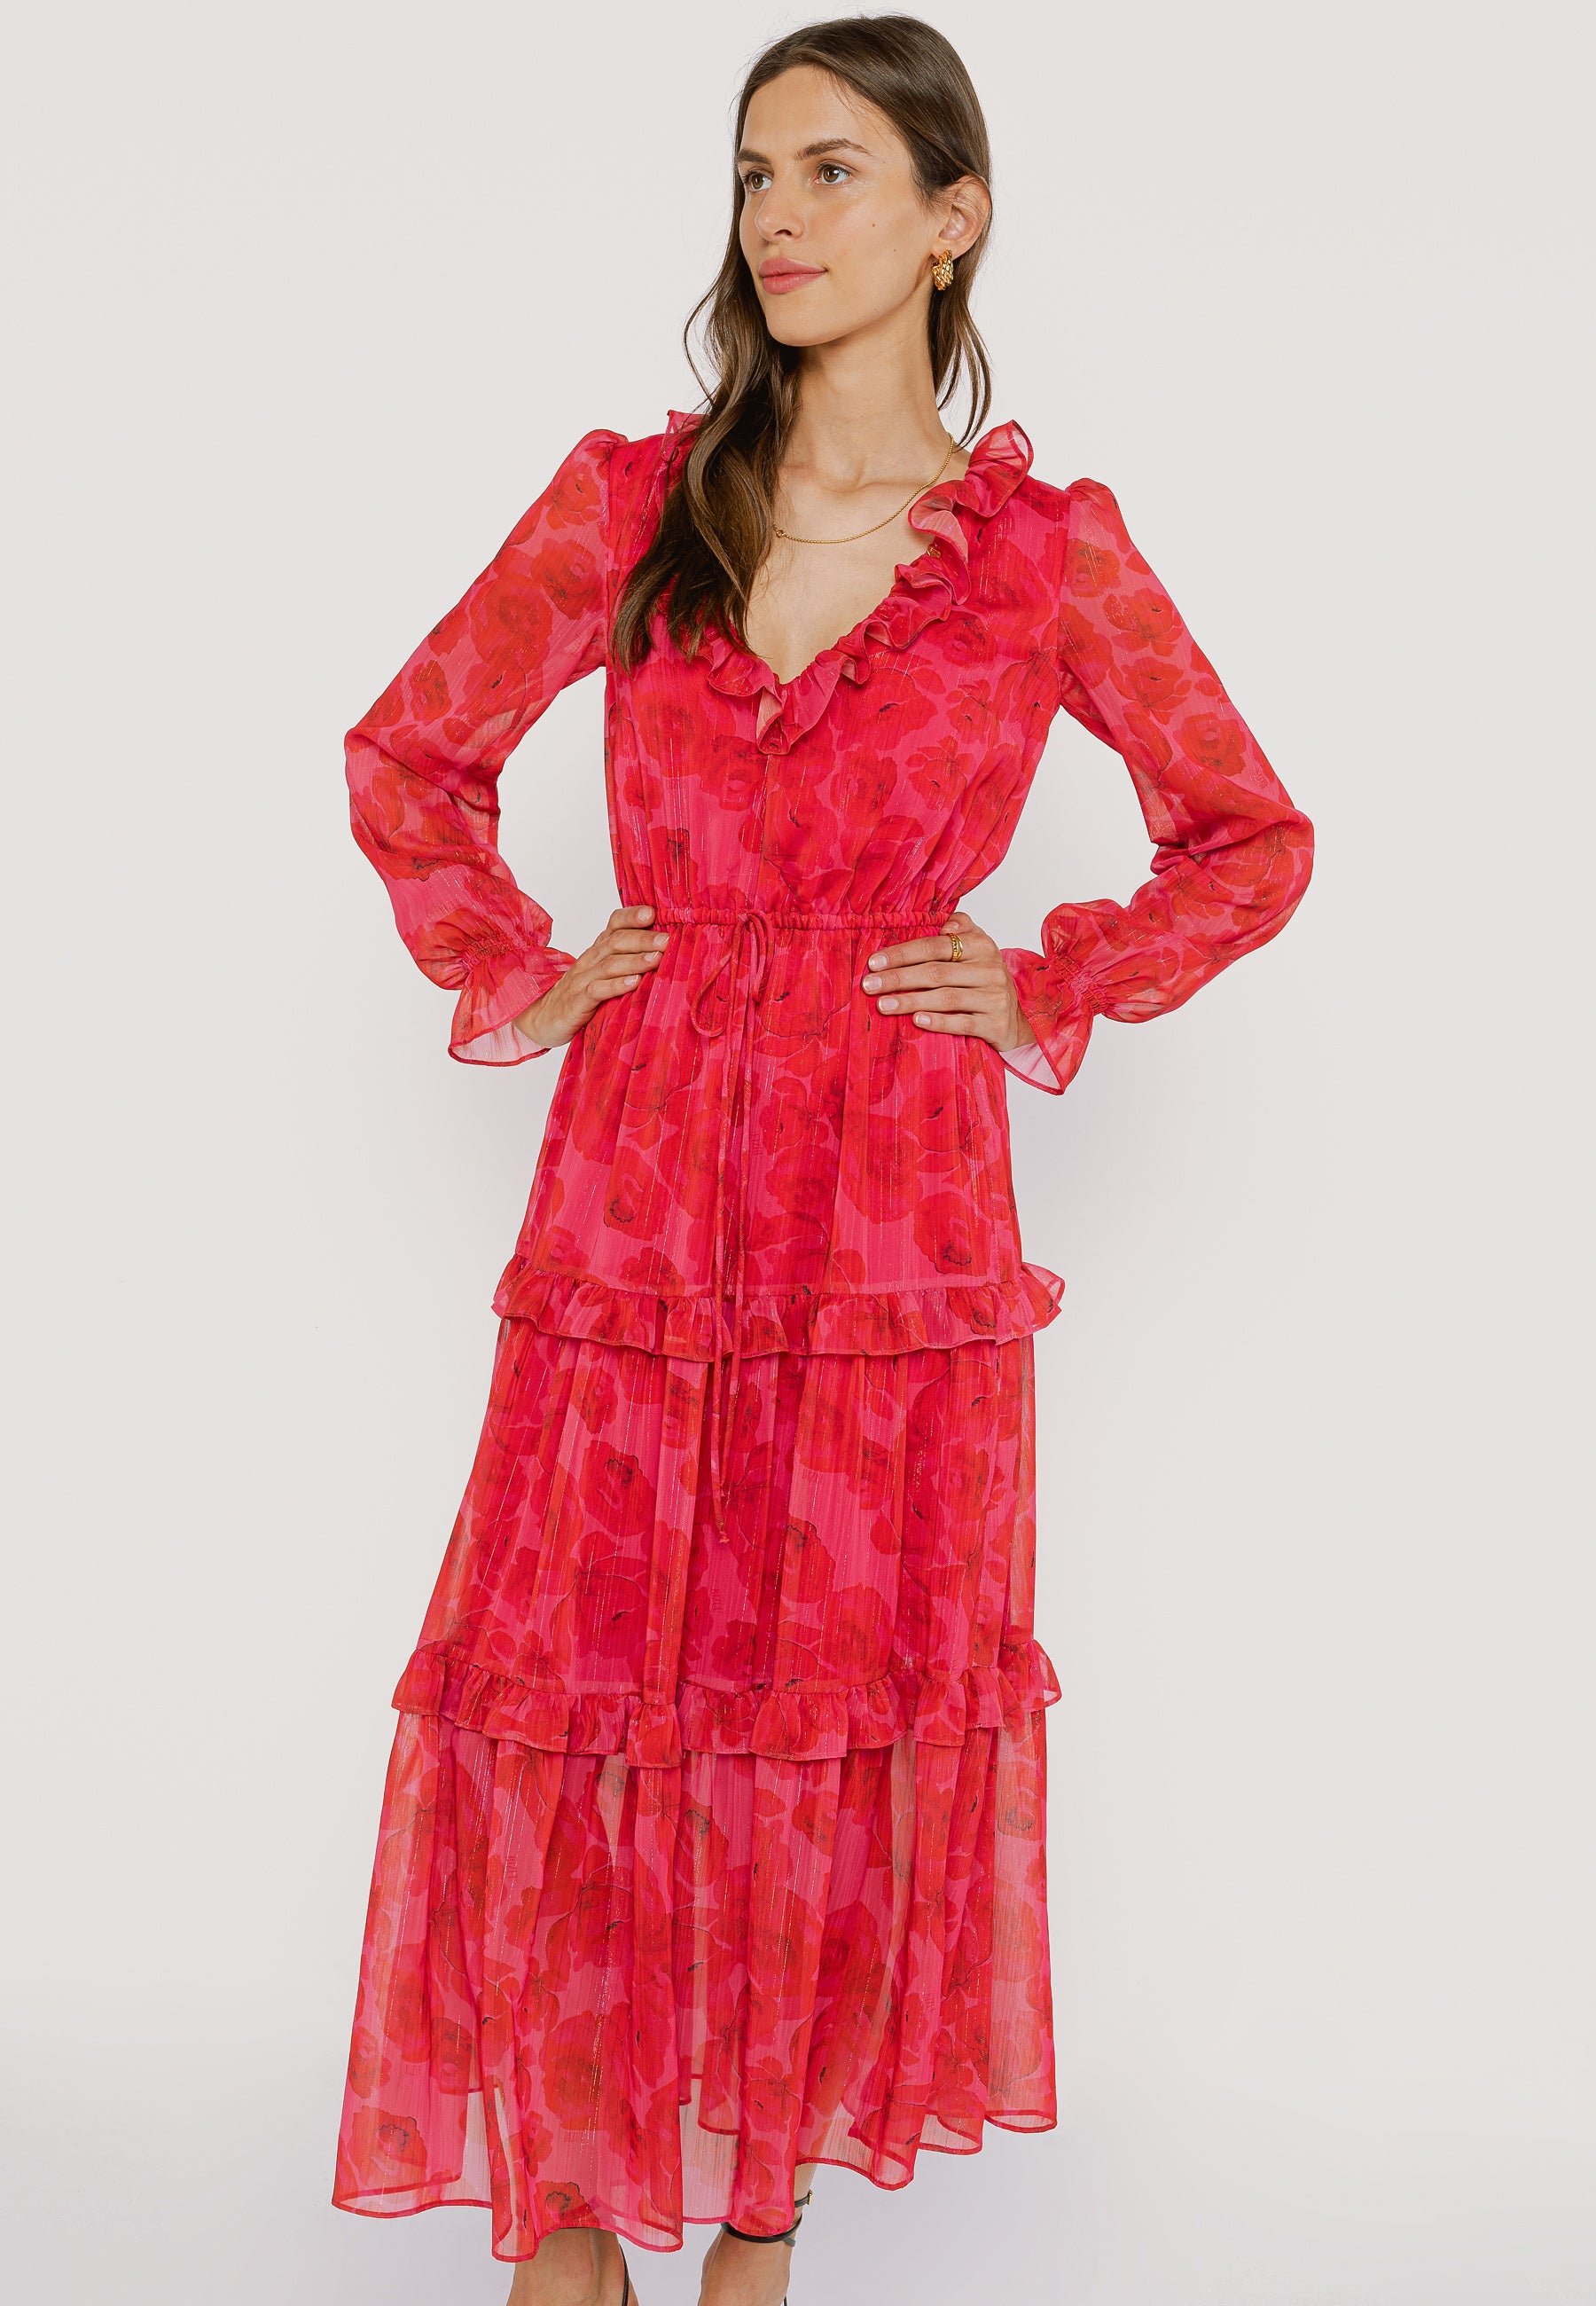 KARROLA REDROSES maxi dress with decorative frills, pink